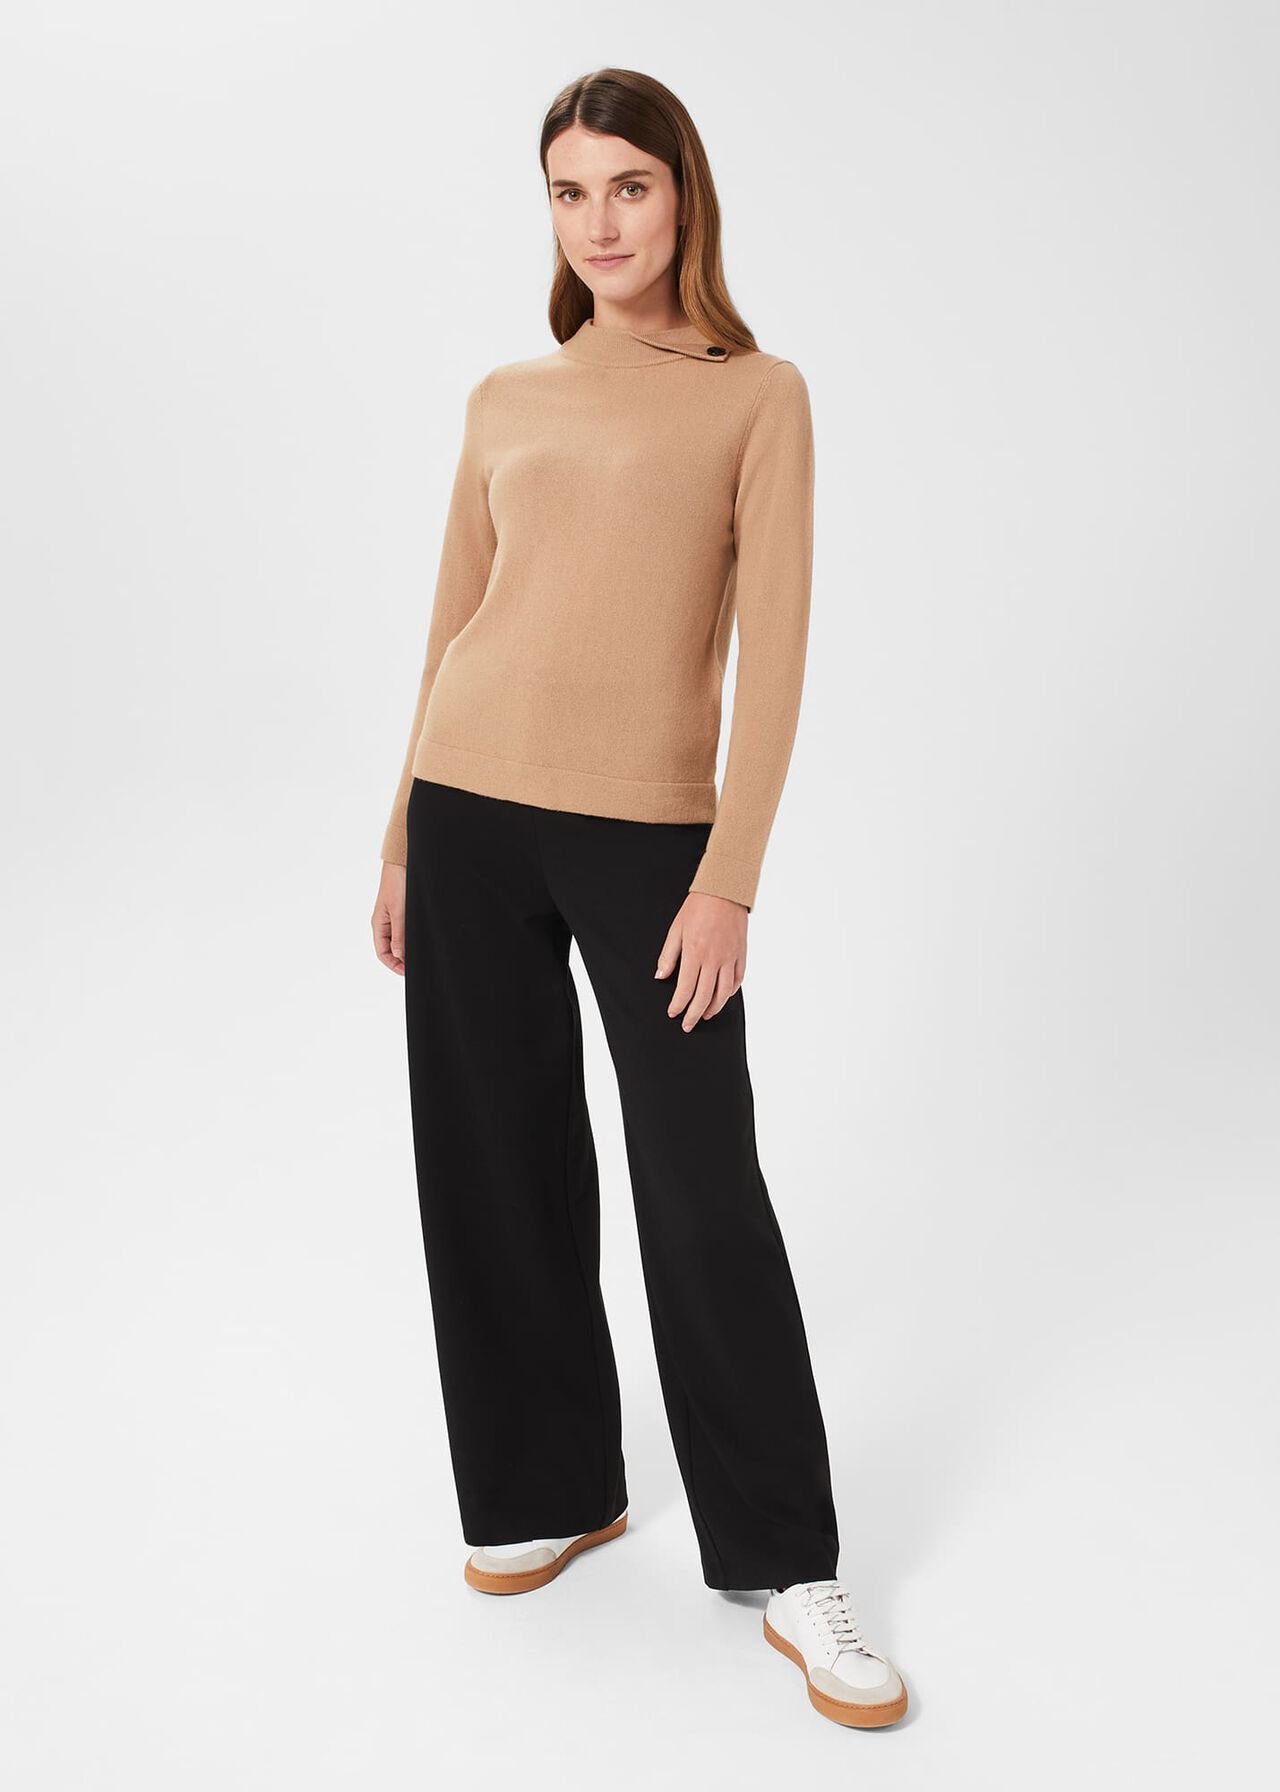 Talia Wool Cashmere Sweater, Camel, hi-res